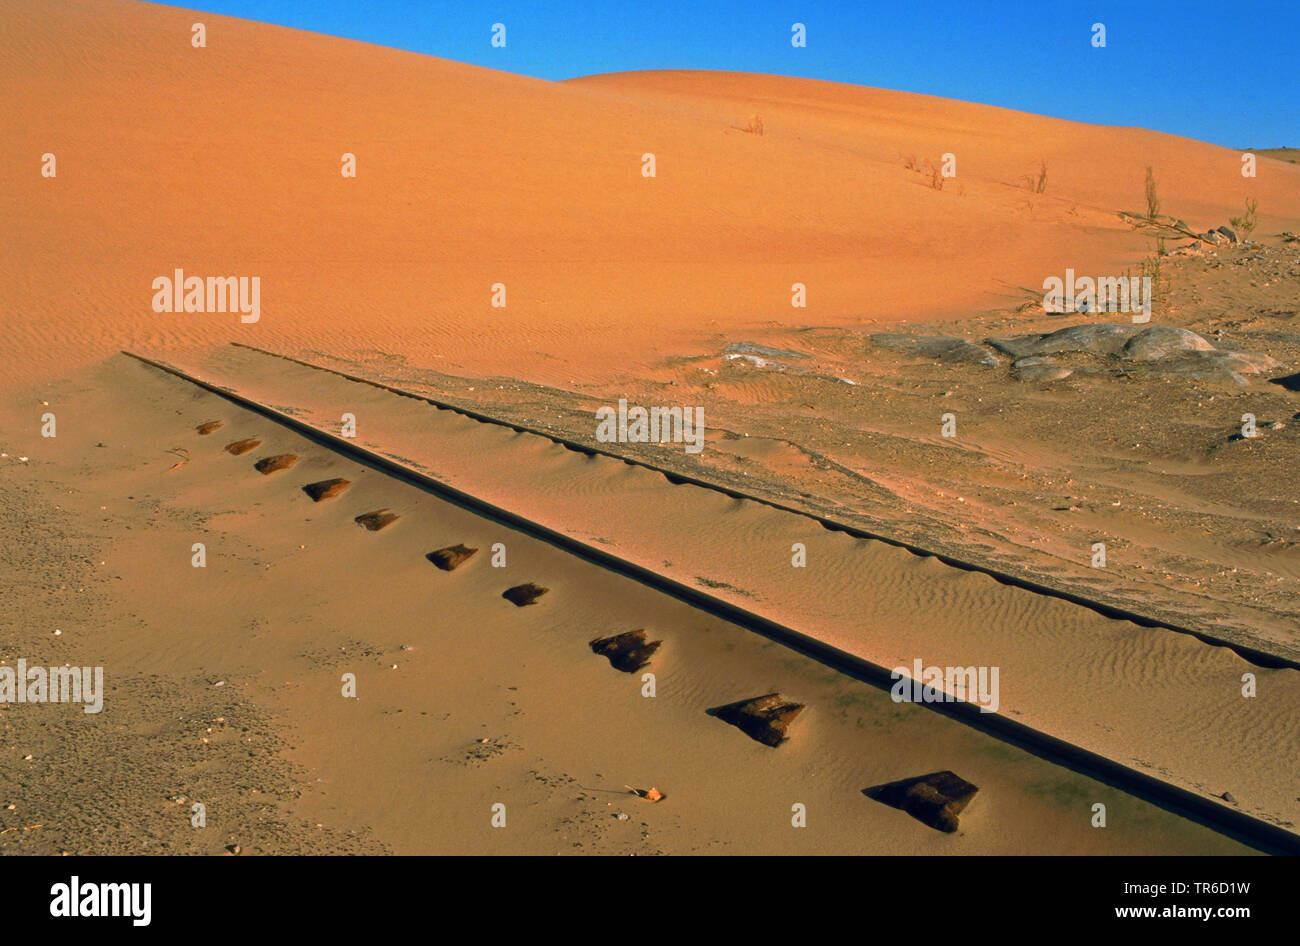 railtracks ended in shifting dune, Namibia Stock Photo